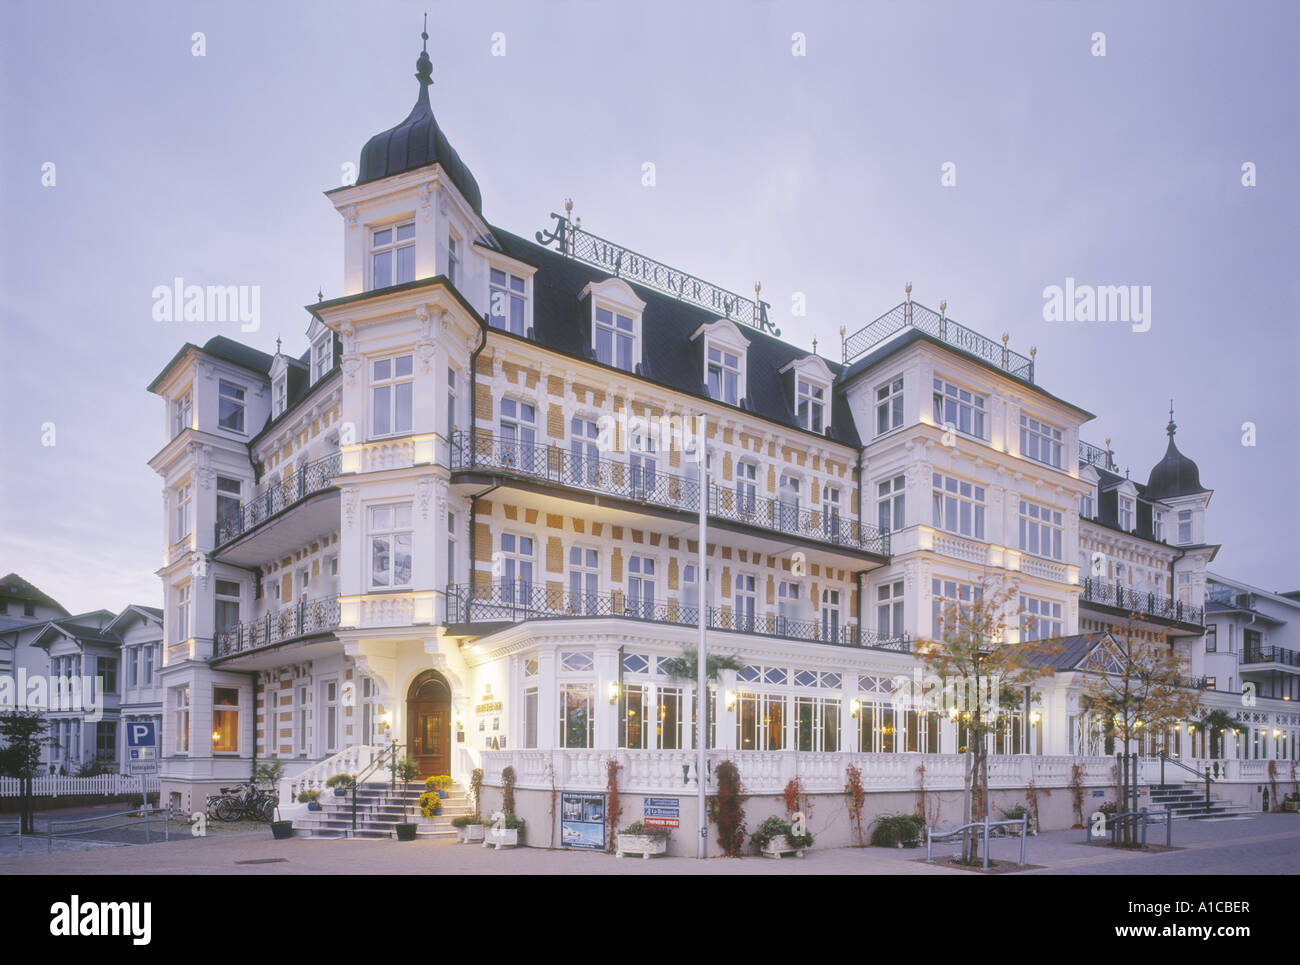 Hotel Ahlbecker Hof near boardwalk, Germany, Mecklenburg-Western Pomerania, Usedom, Ahlbeck Stock Photo